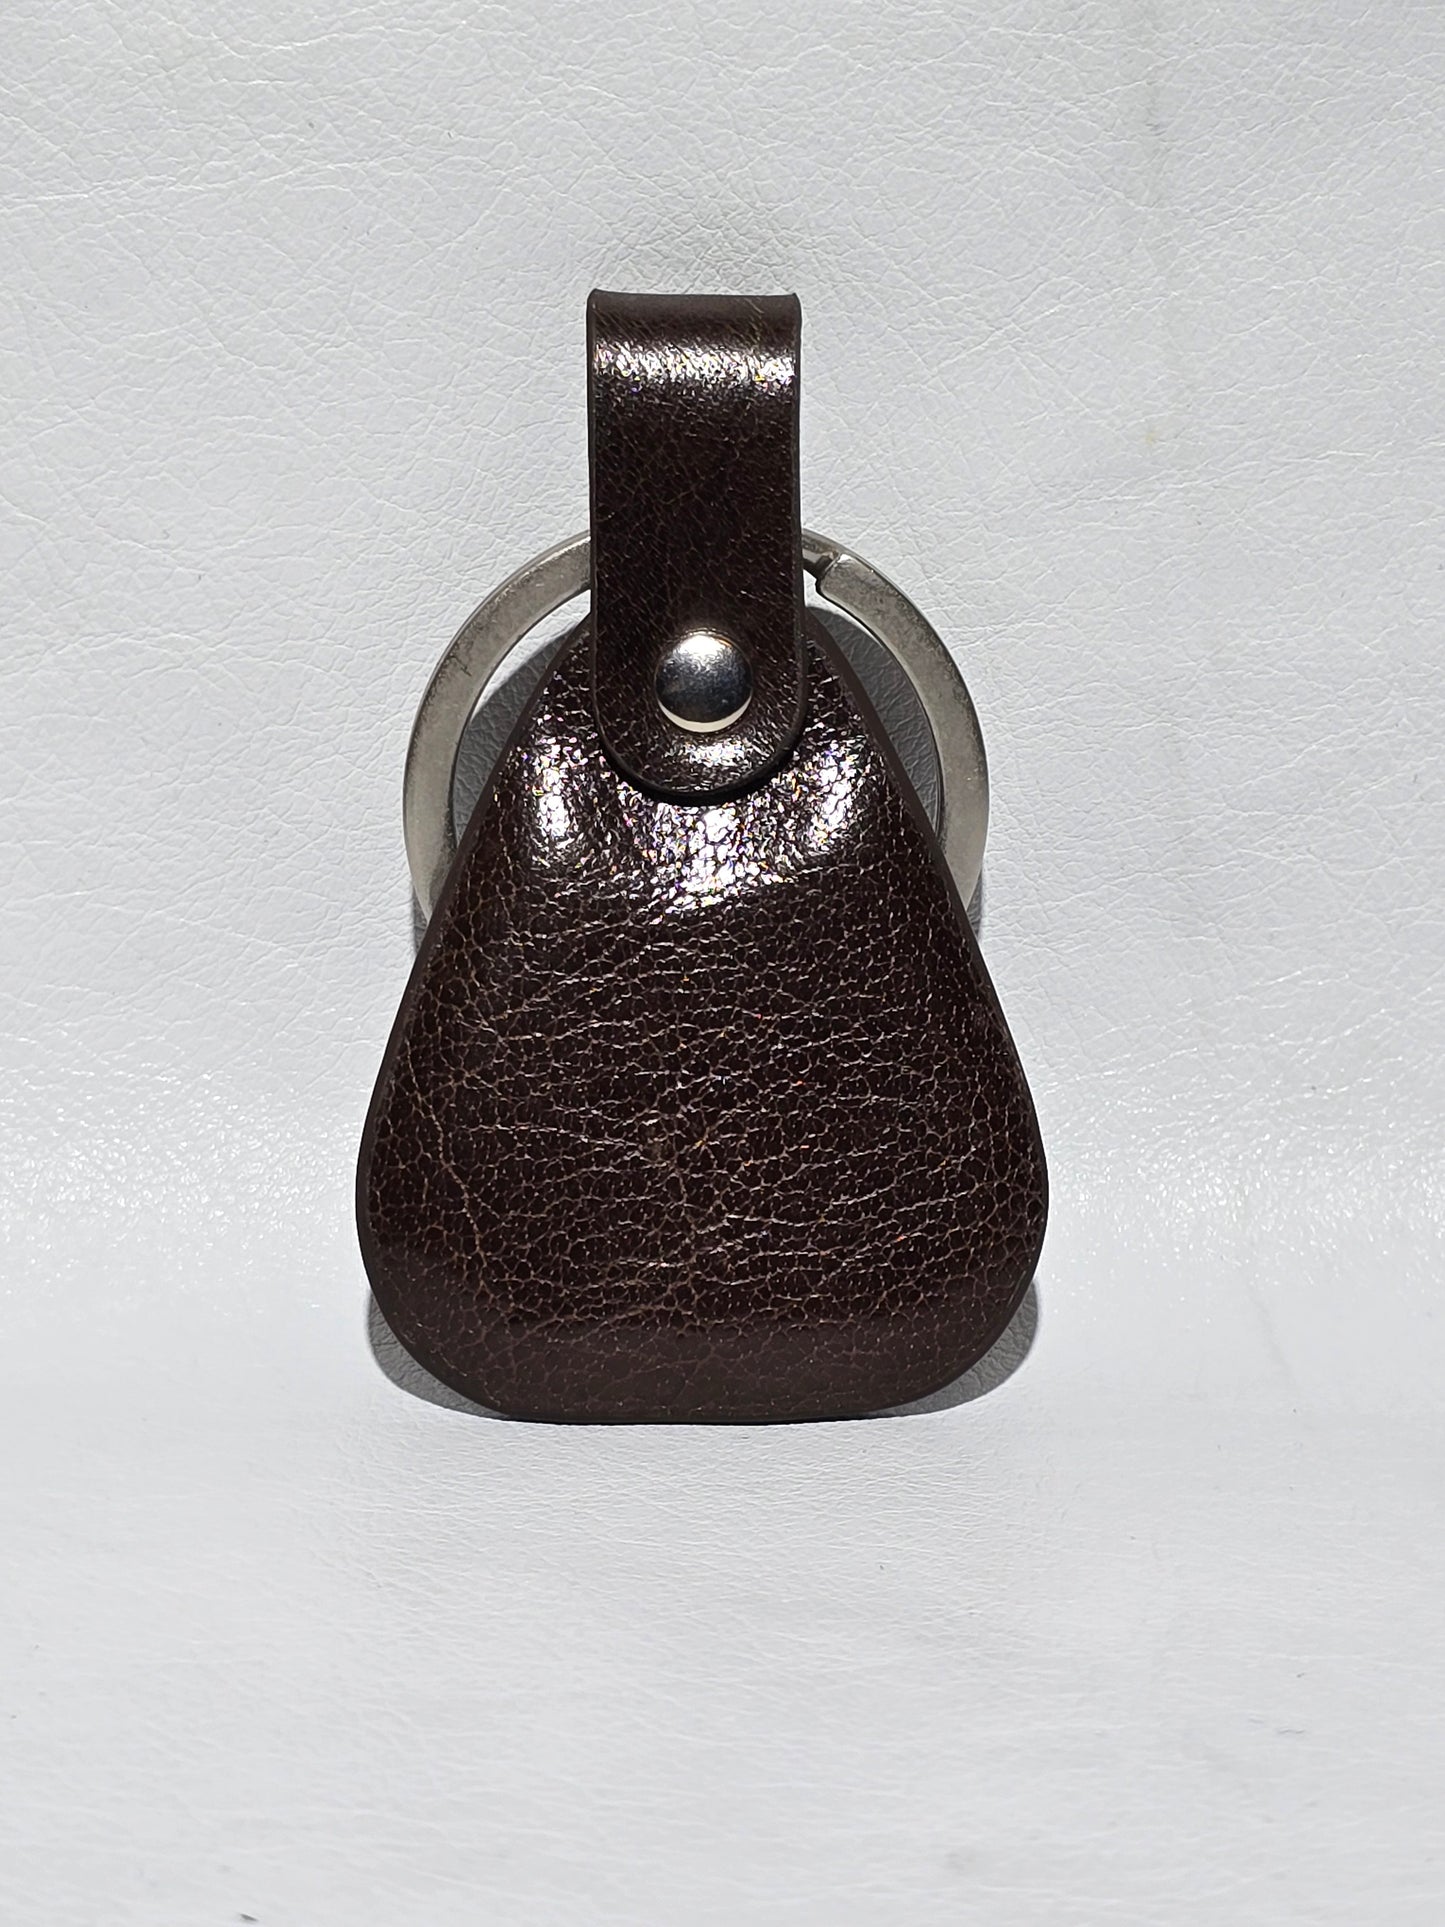 Buffalo Leather Keychain